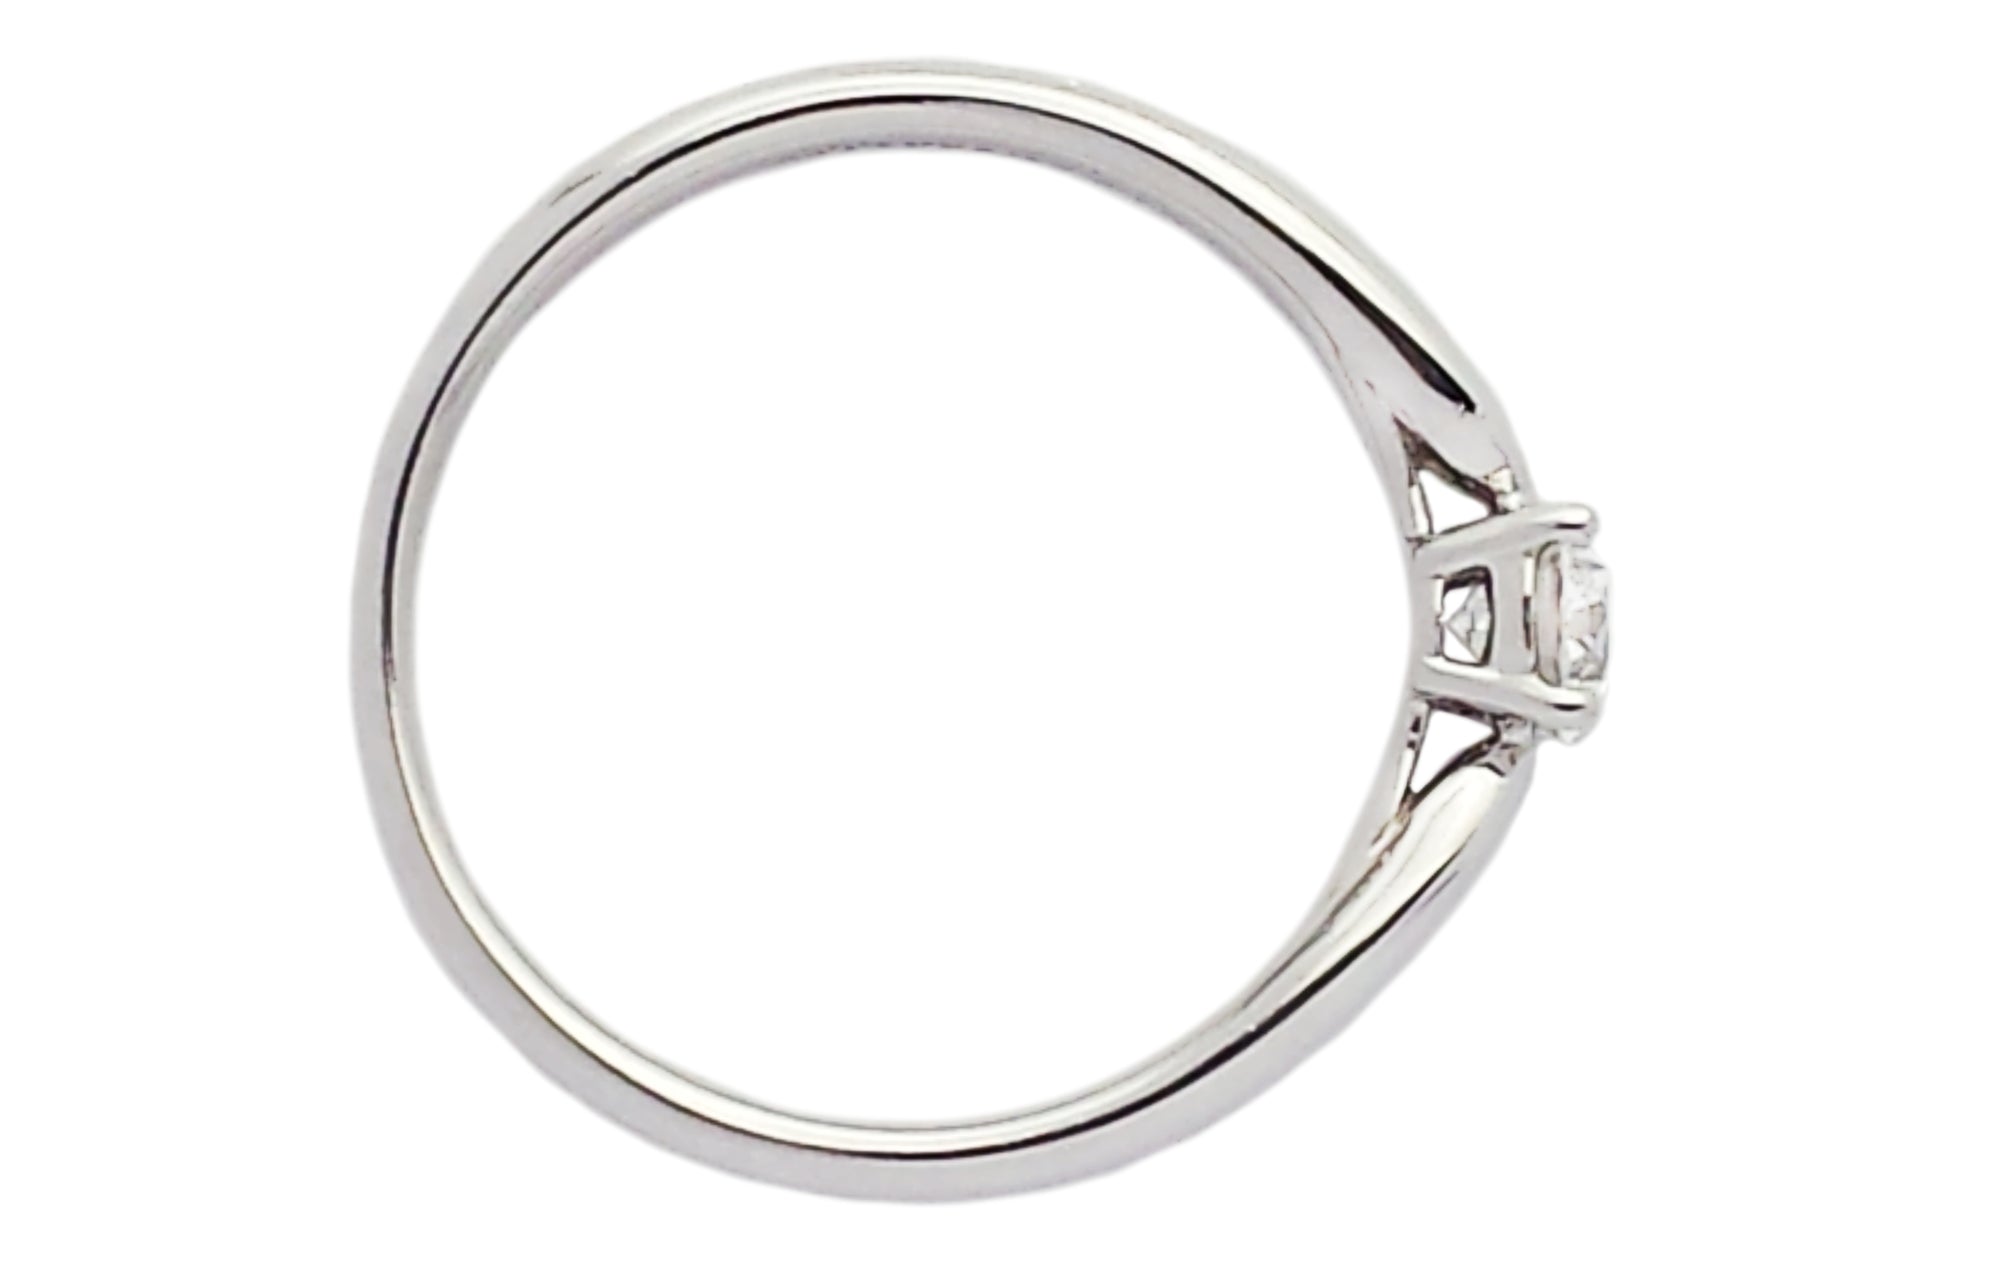 Tiffany & Co. 0.26ct G/VS1 Harmony Diamond Engagement Ring